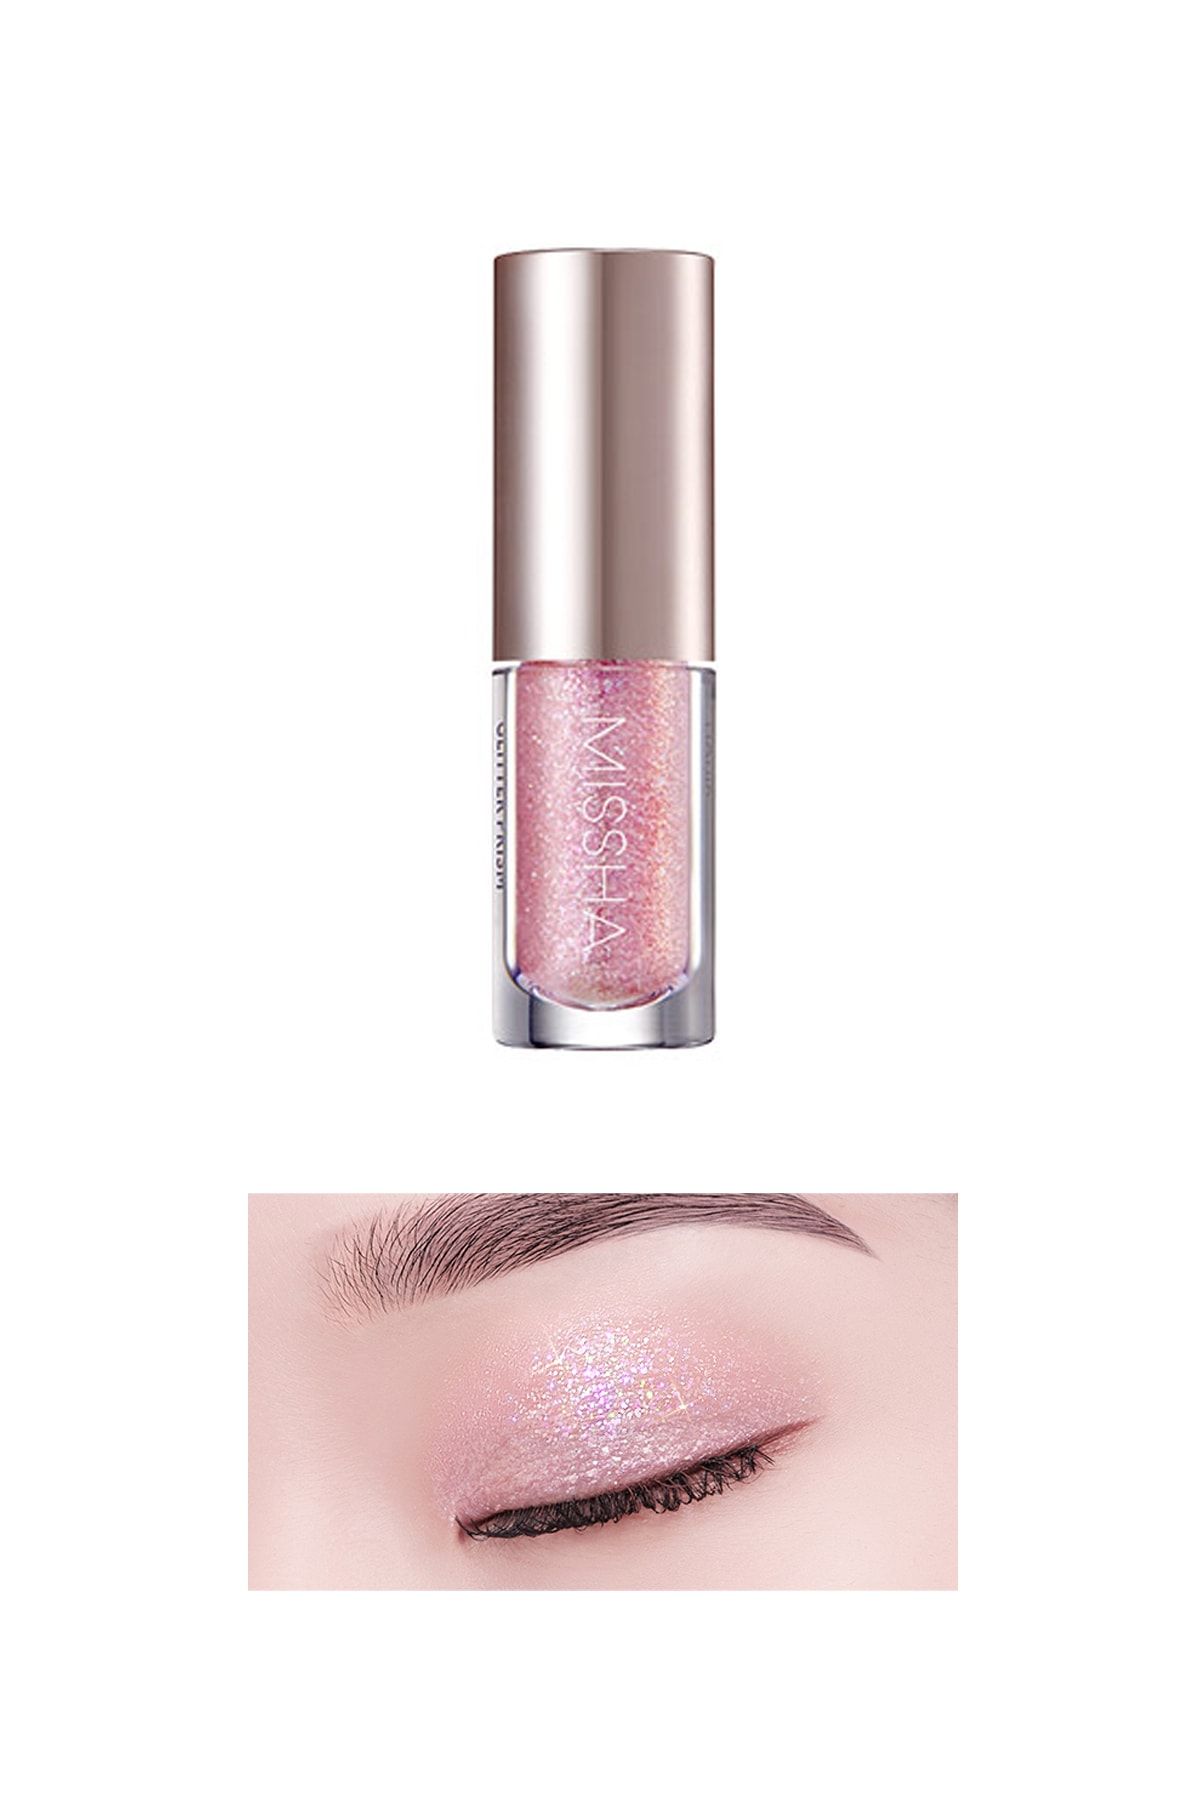 Missha Işıltılı Ve Parlak Glitter Likit Göz Farı No.3 Space Odyssey Glitter Prism Liquid Eyeshadow Topper